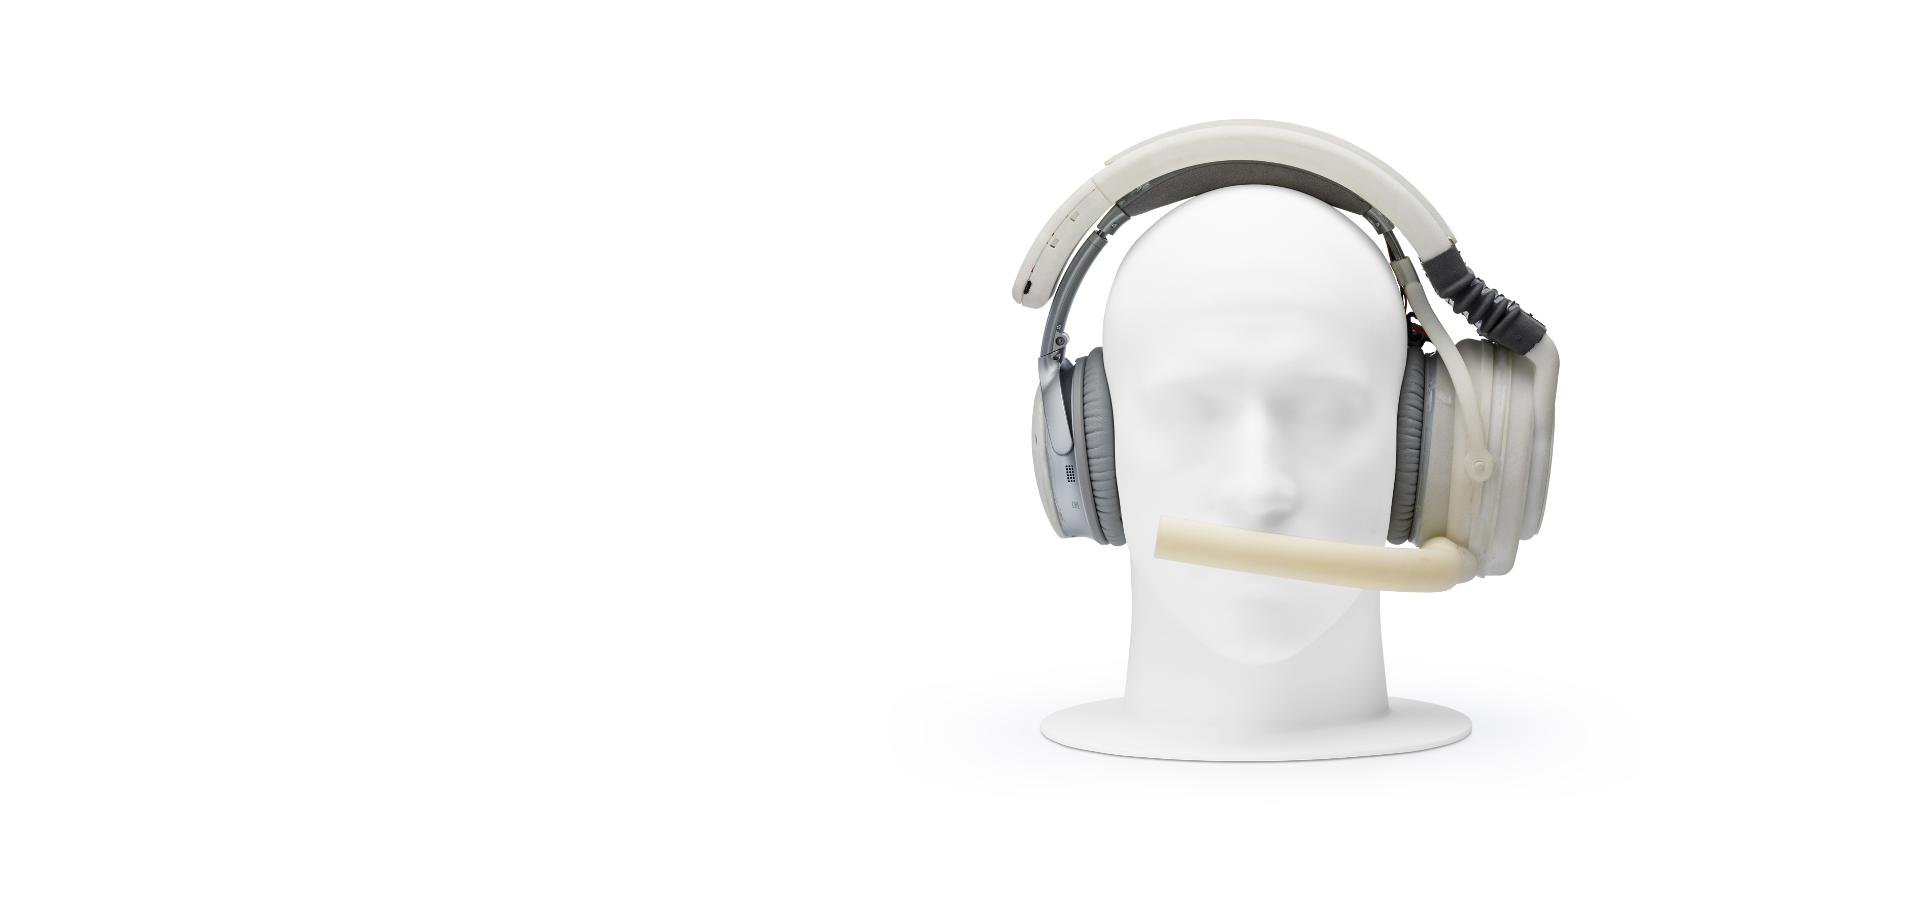 manikin head wearing prototype headphones, with mouthpiece.